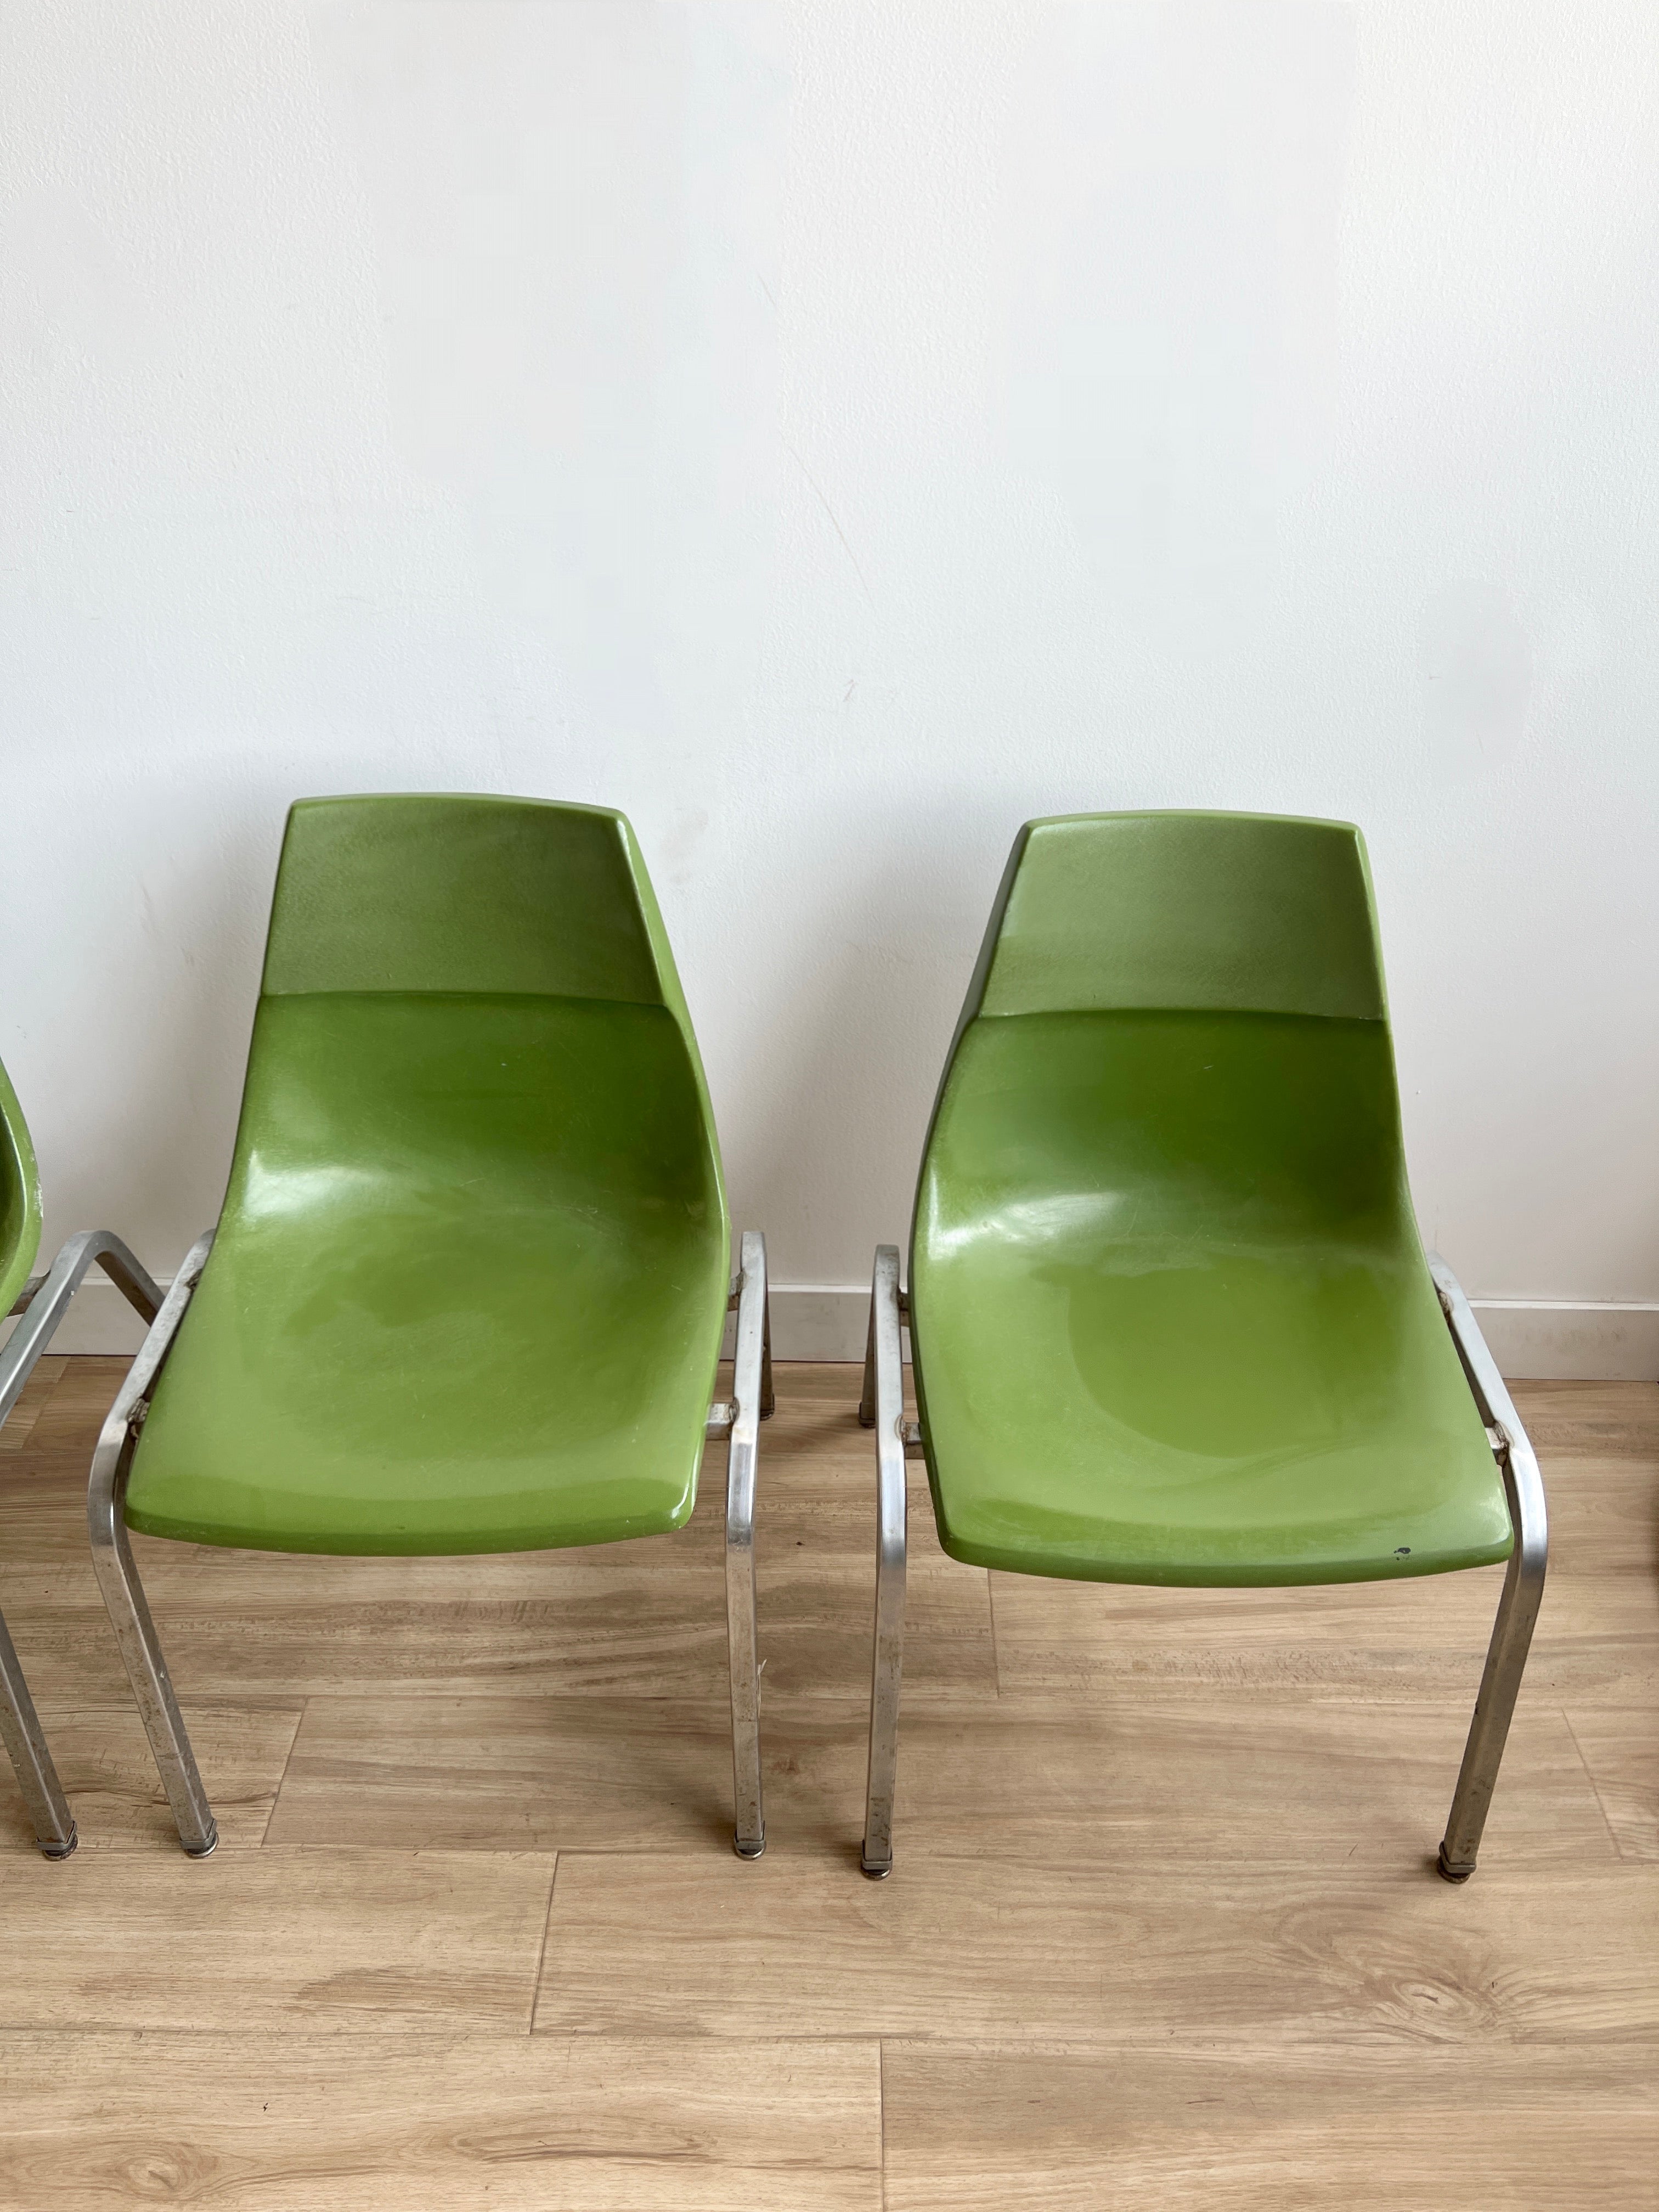 Set of Four Vintage Green Fiberglass Chairs